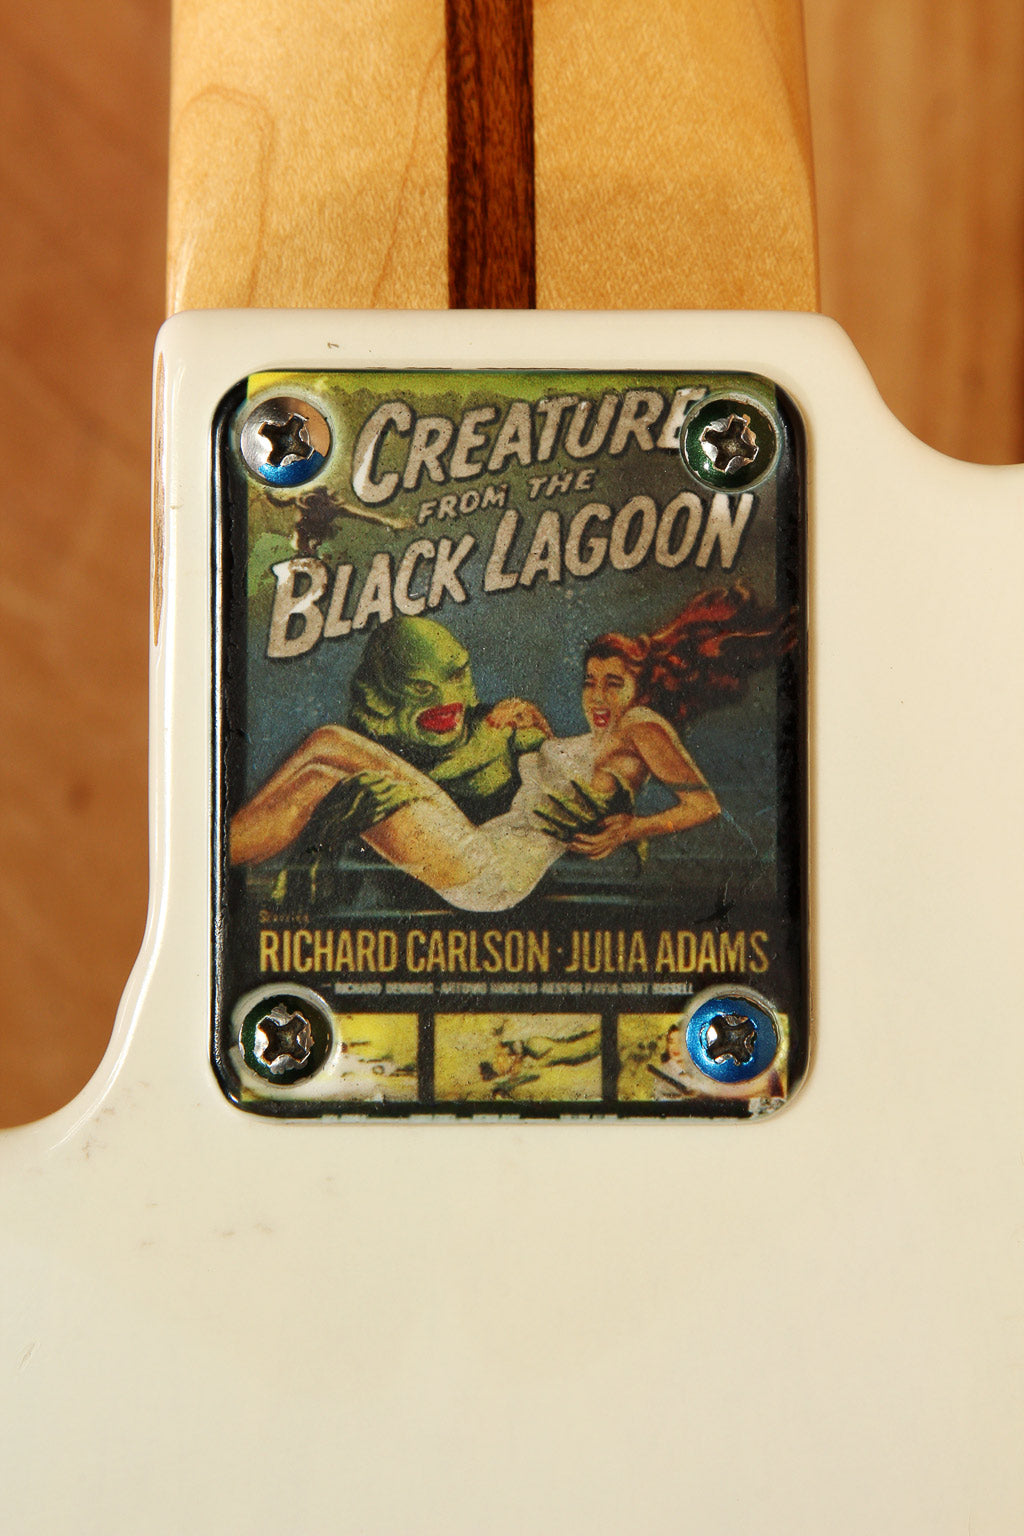 Fender Mike Dirnt Road Worn Precision Bass White Blonde P Upgrades 14972